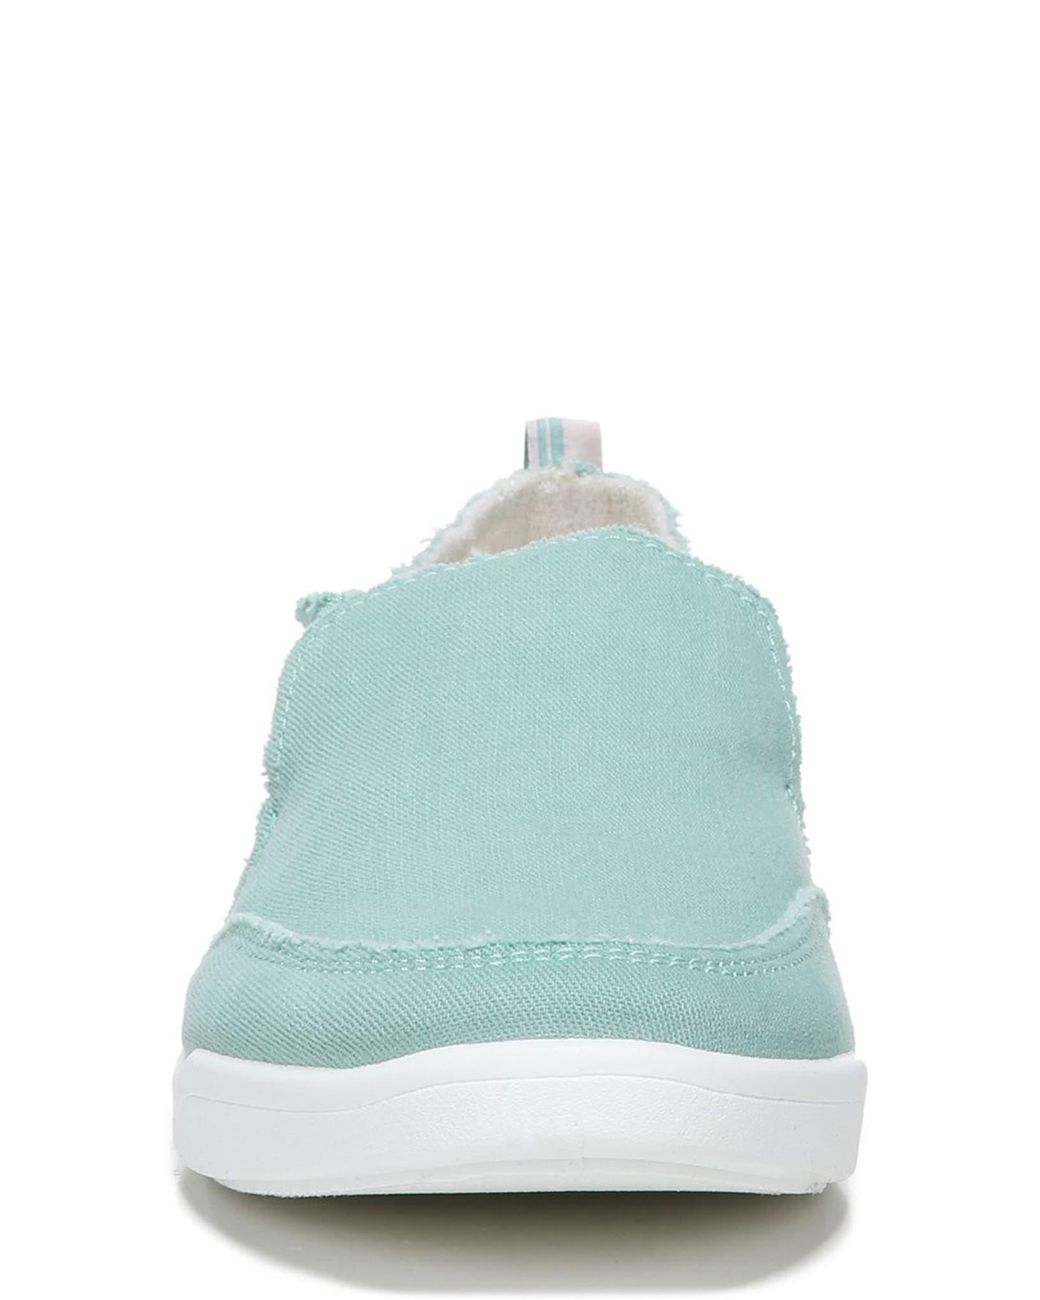 Vionic Malibu Canvas Frayed Washable Slip-On Sneakers